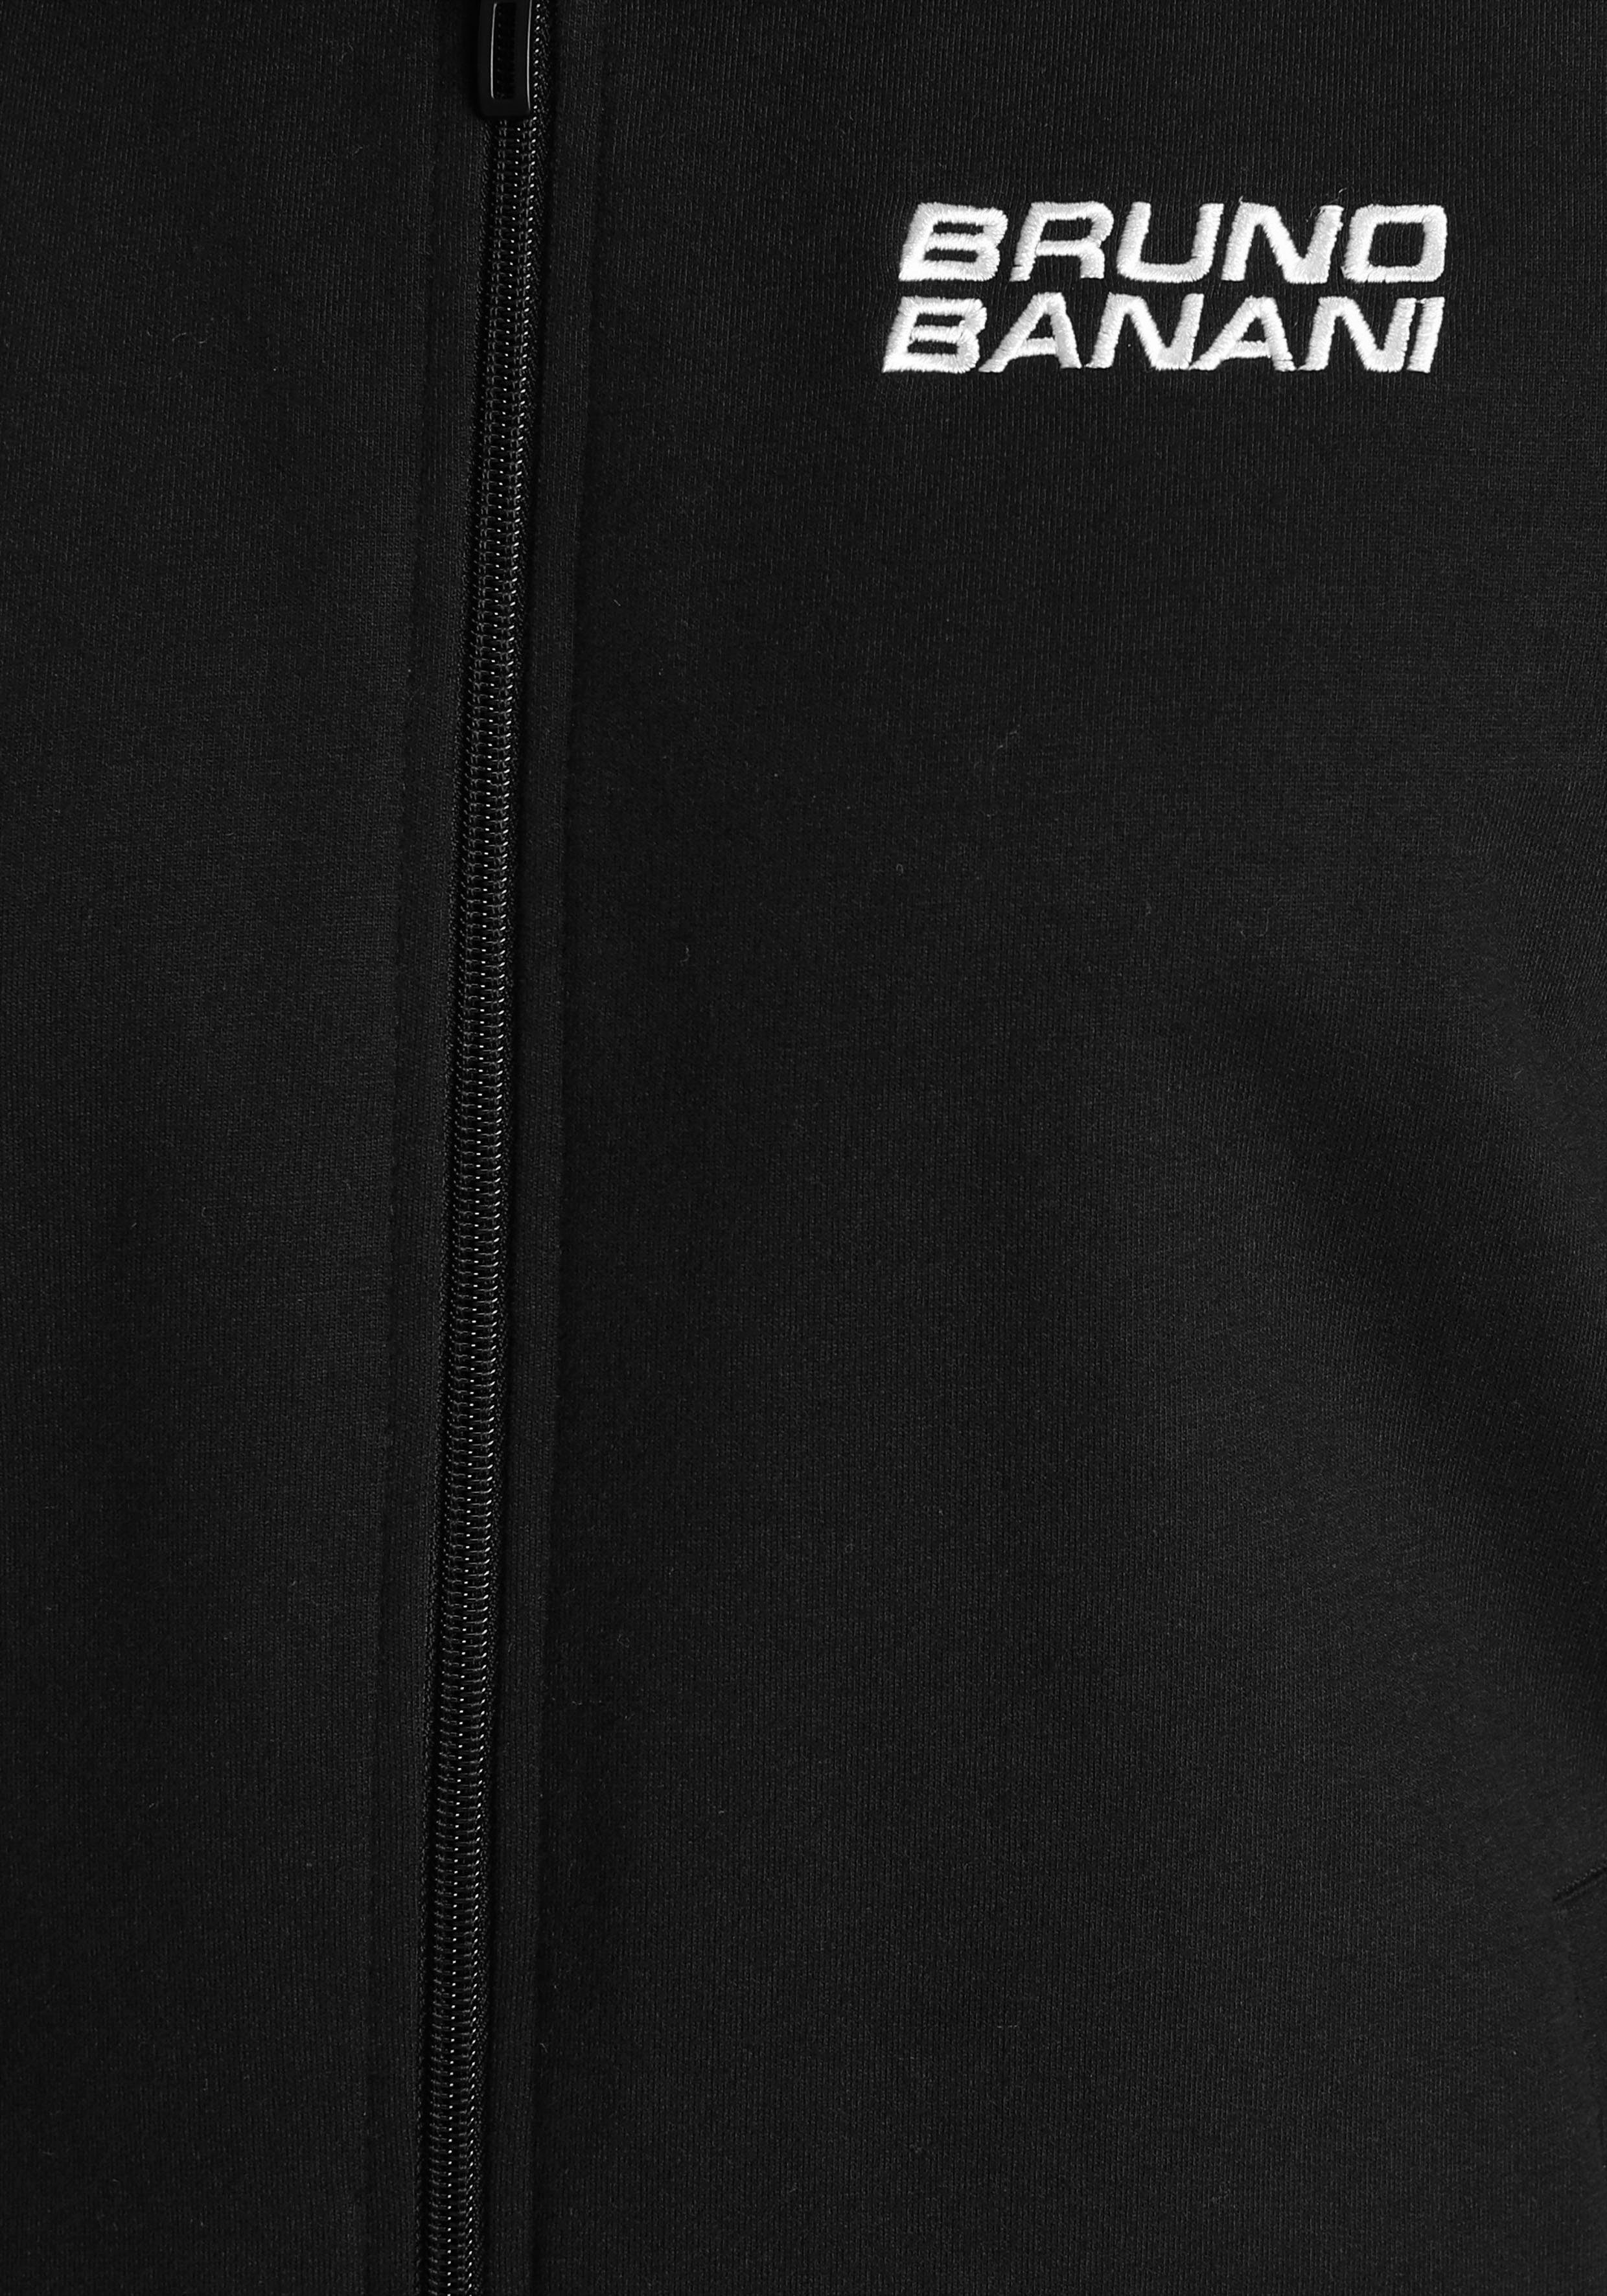 Fit, Bruno Banani Logo Comfort Stickerei mit Jogginganzug schwarz-grau